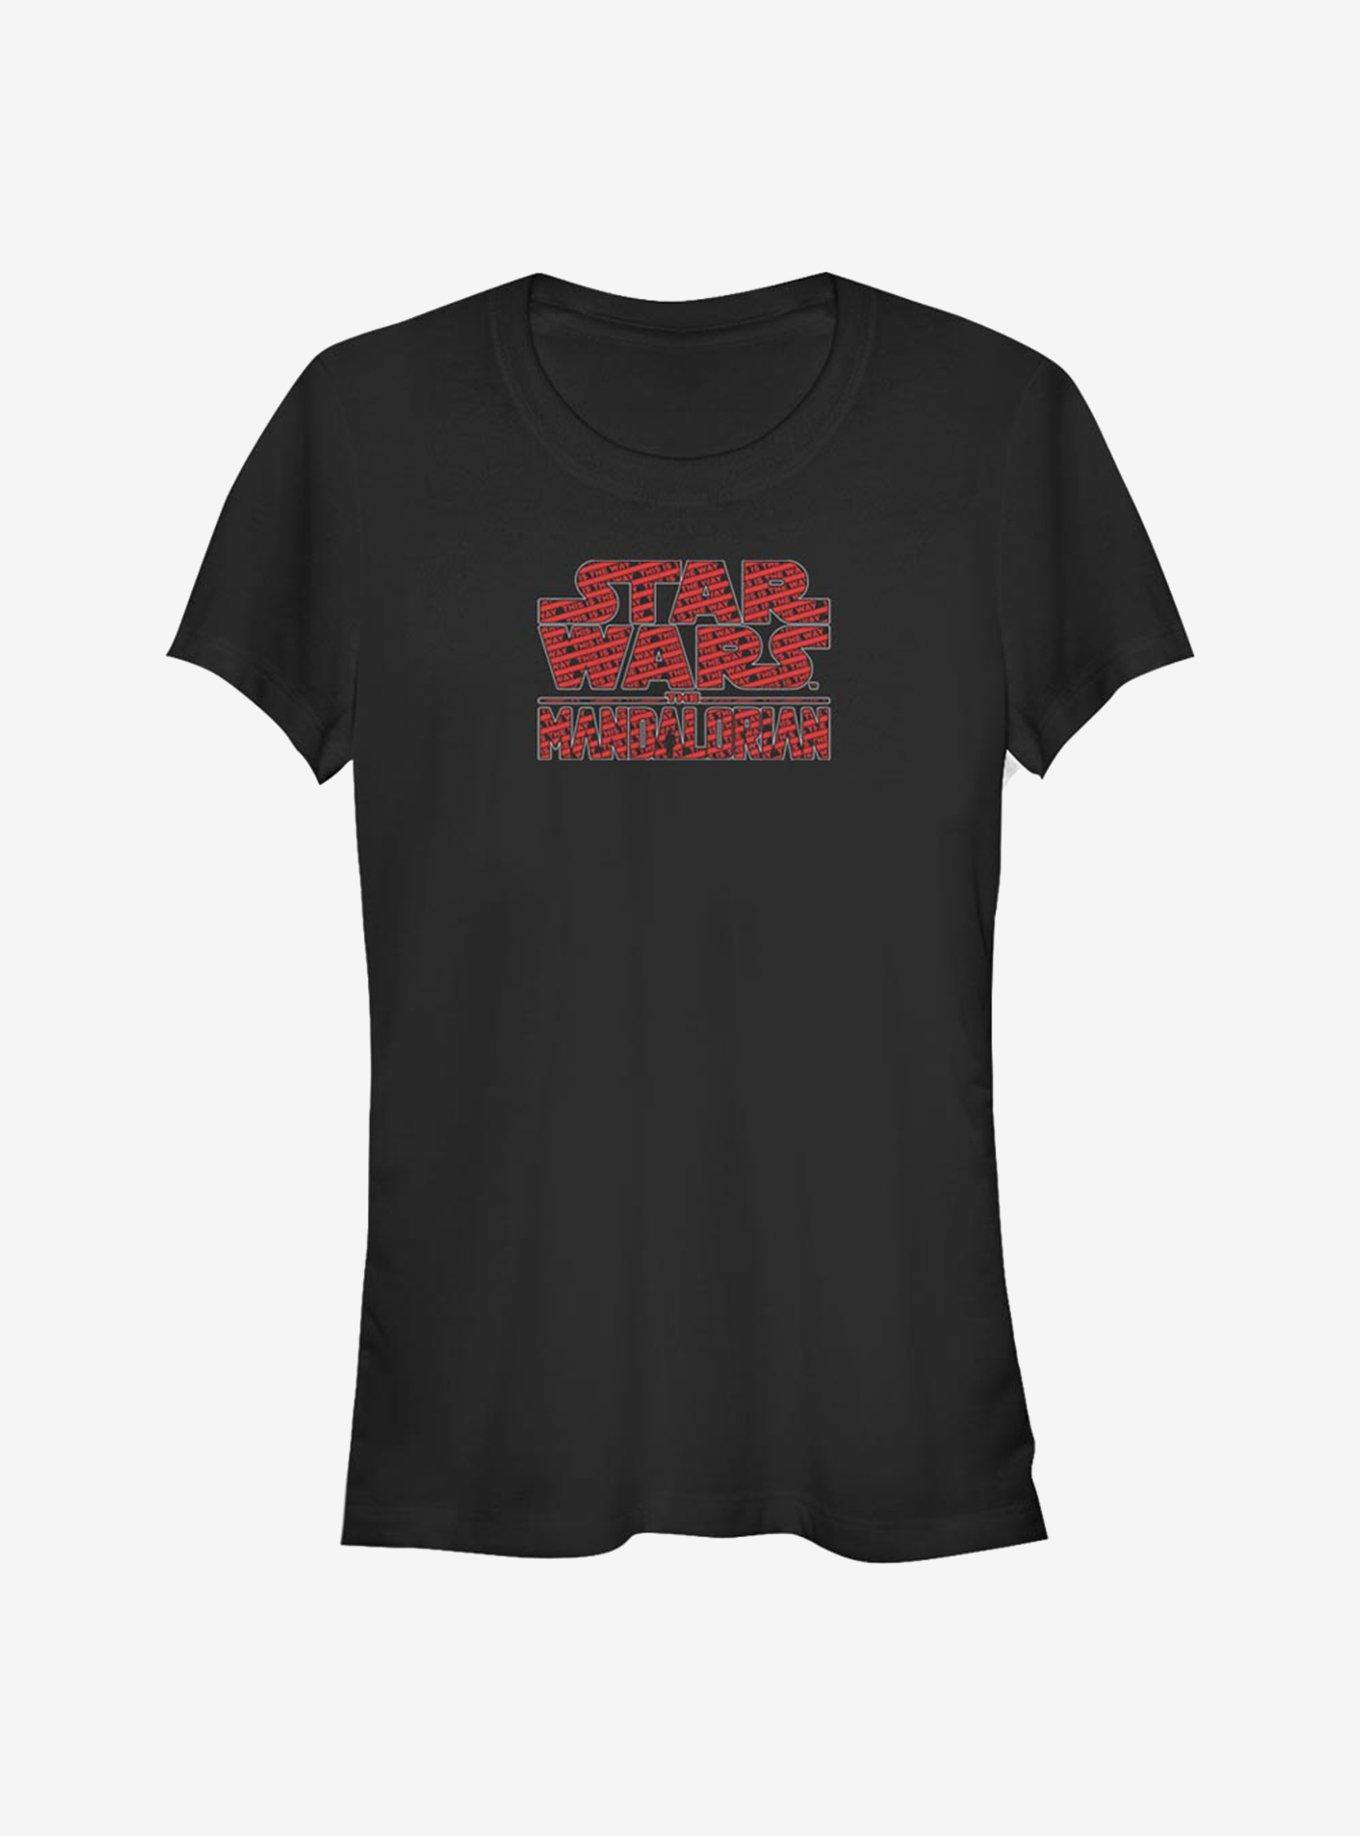 Star Wars The Mandalorian The Way Star Wars Logo Girls T-Shirt, BLACK, hi-res